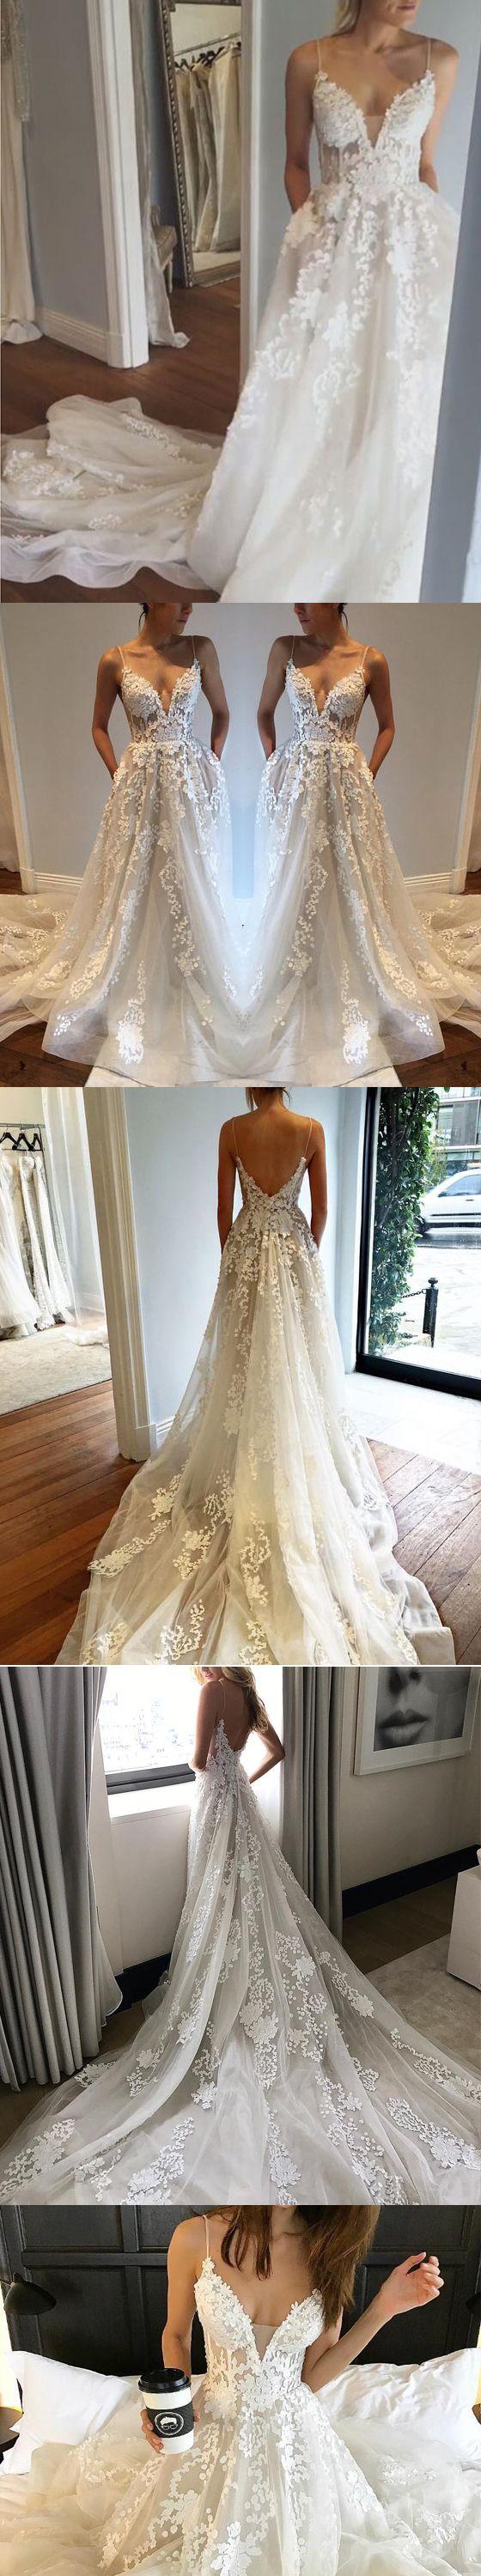 زفاف - Applique Sexy Online V Neck Ivory Fashion Long Prom Wedding Dresses, BG51501 - US0 / Picture Color